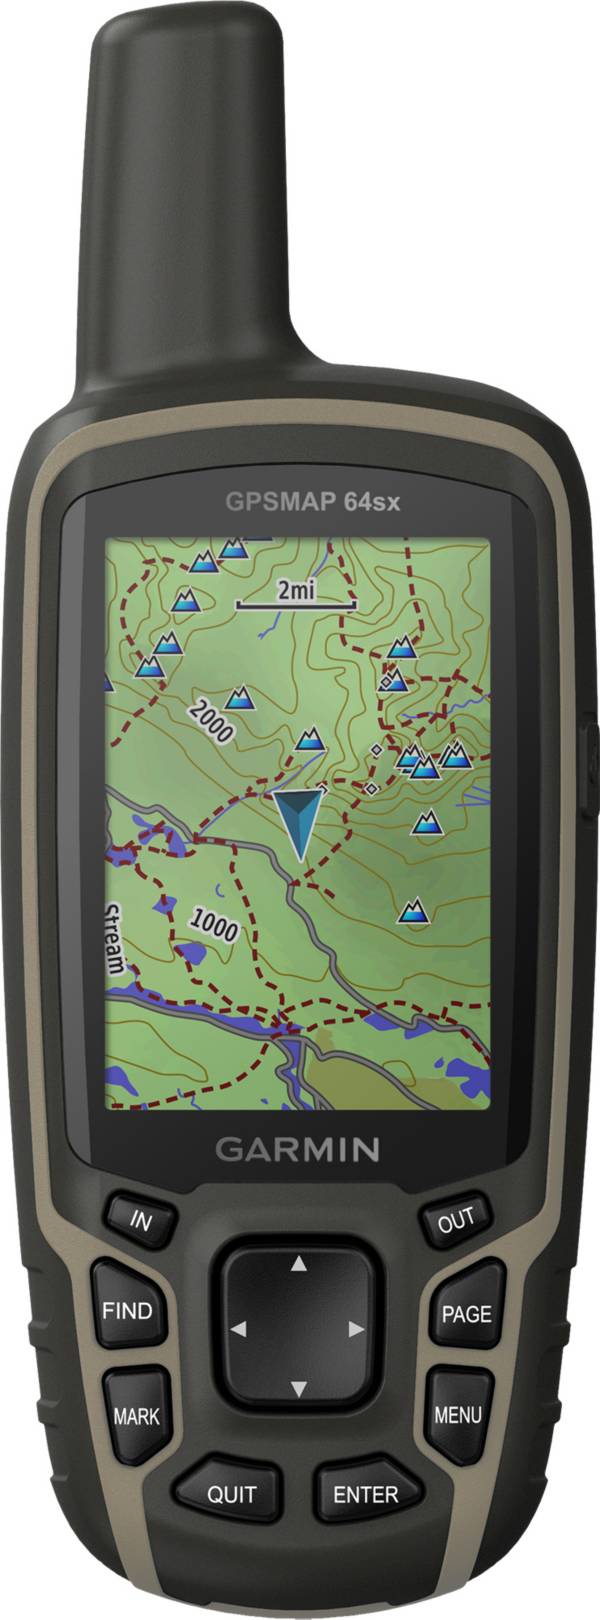 Garmin GPSMAP 64sx Handheld GPS with Navigation Sensors product image